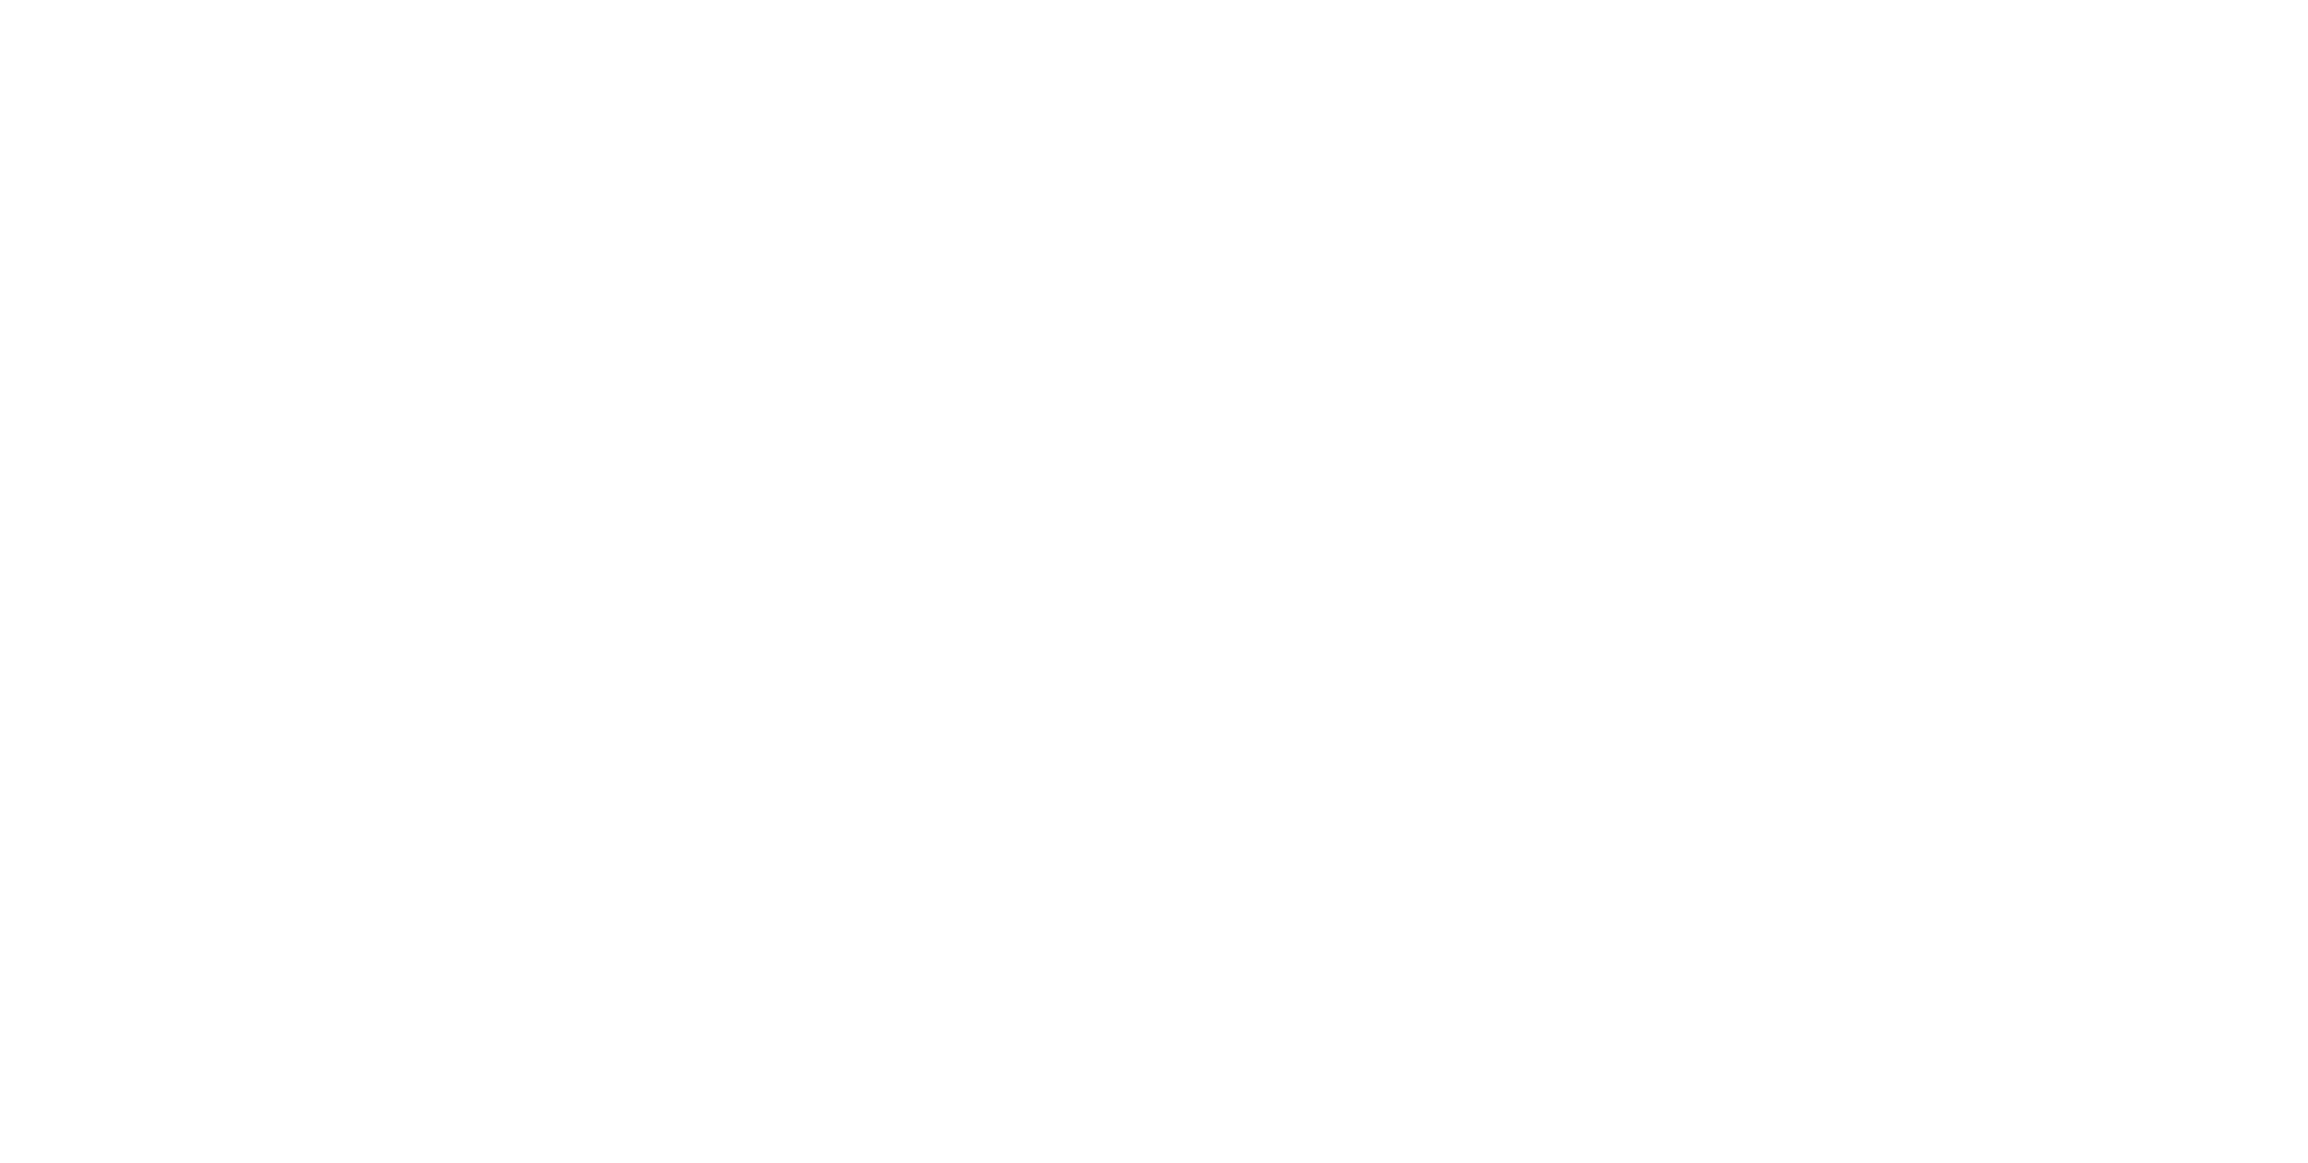 Bobby's Triple Threat logo